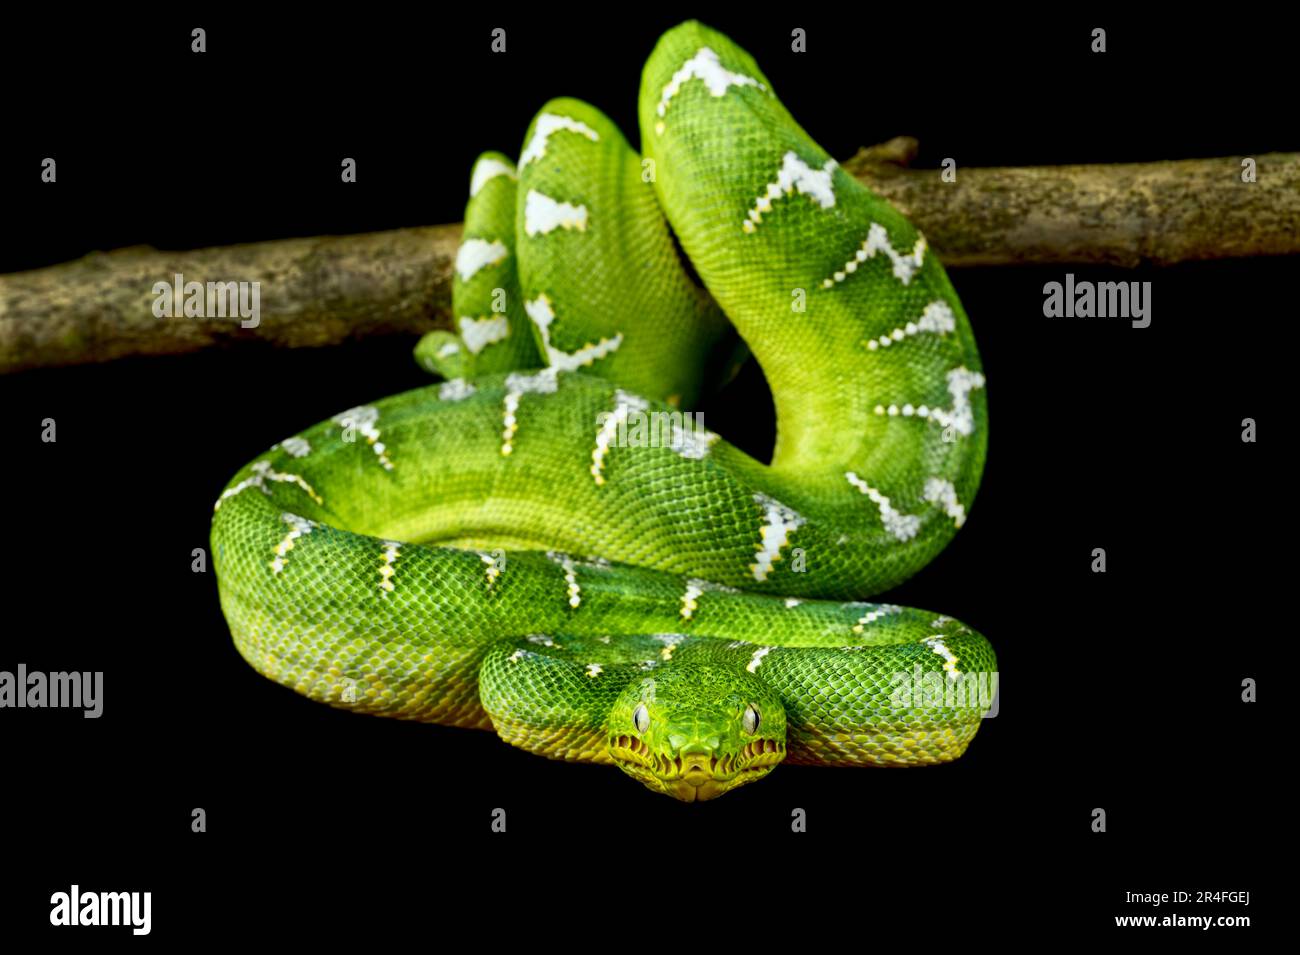 Grüne Baumboa (Corallus caninus) Stockfoto